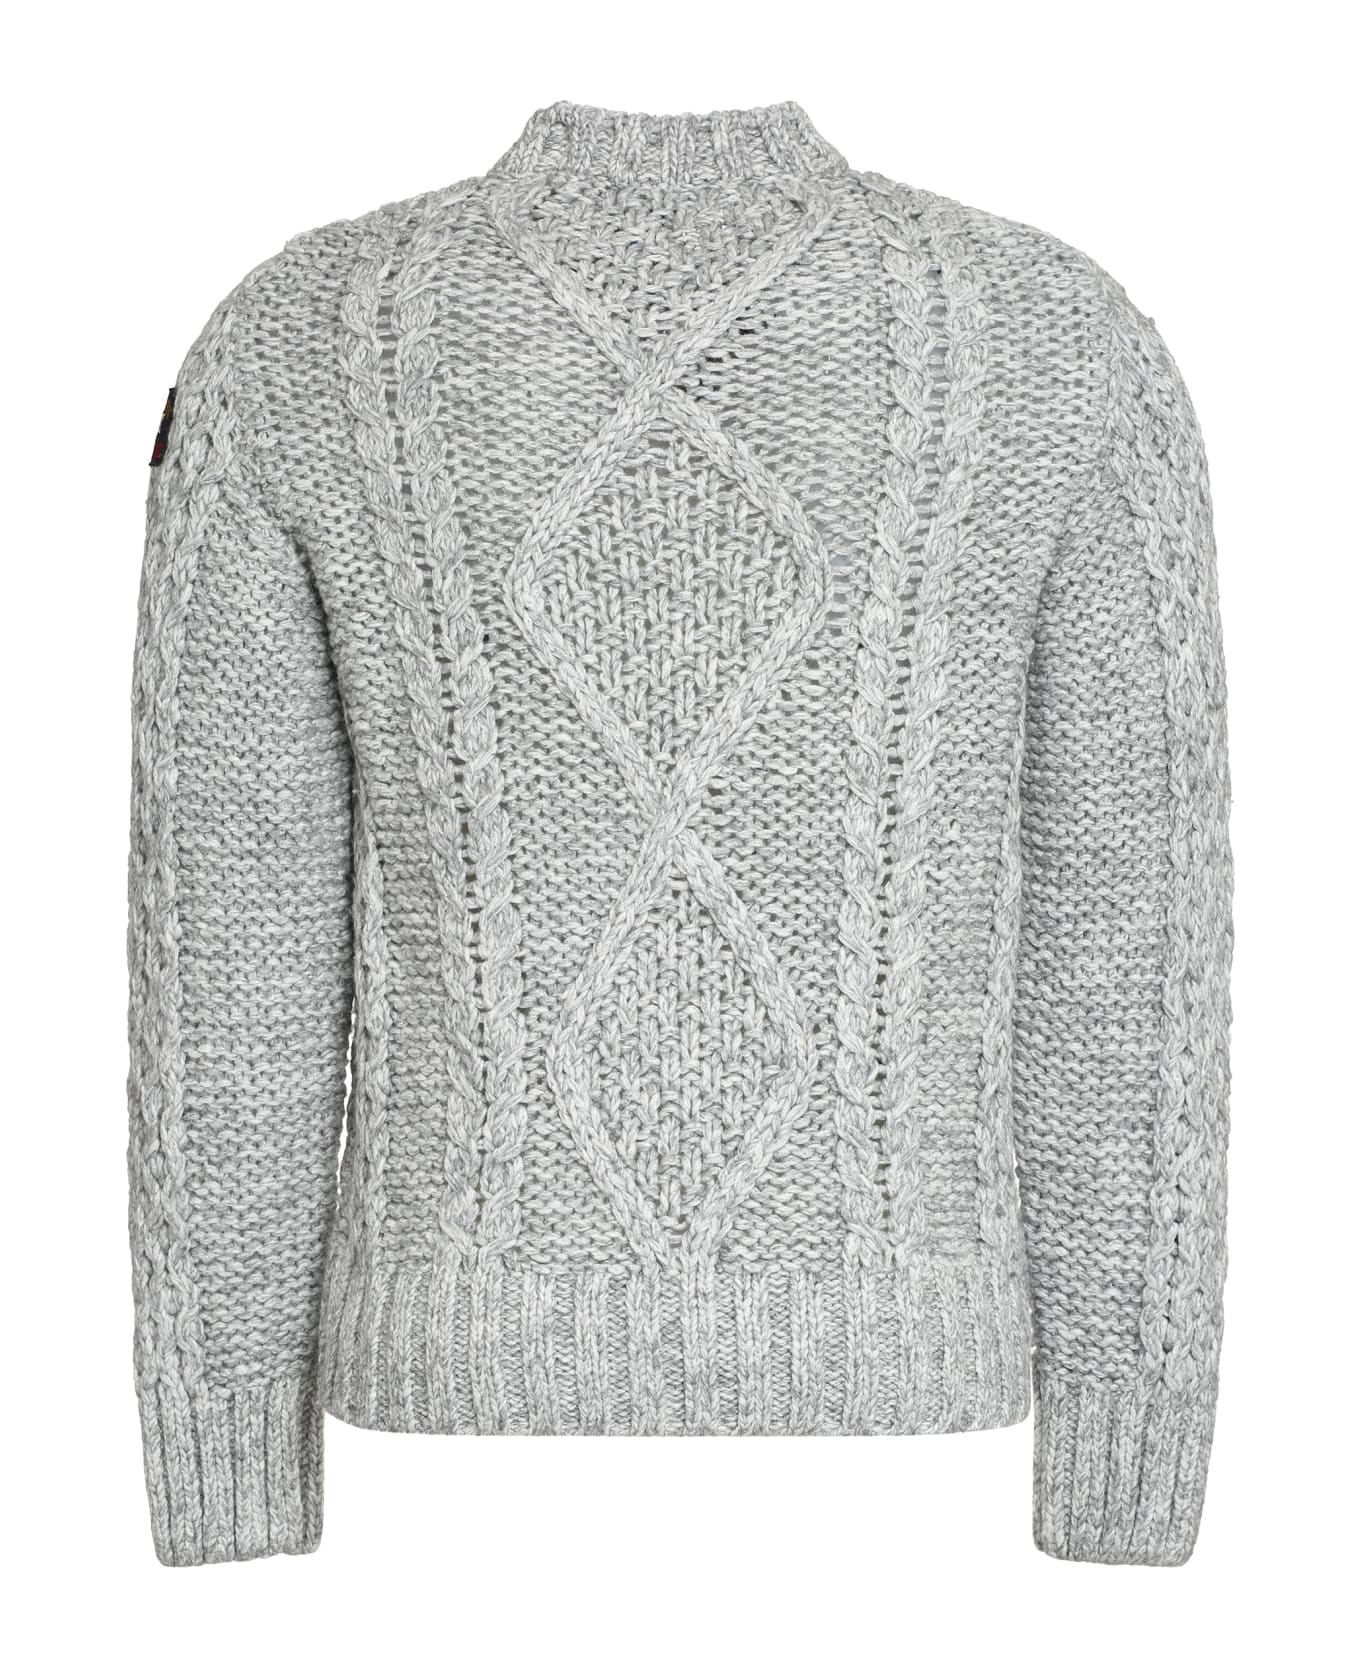 Paul&Shark Cable Knit Sweater - grey ニットウェア